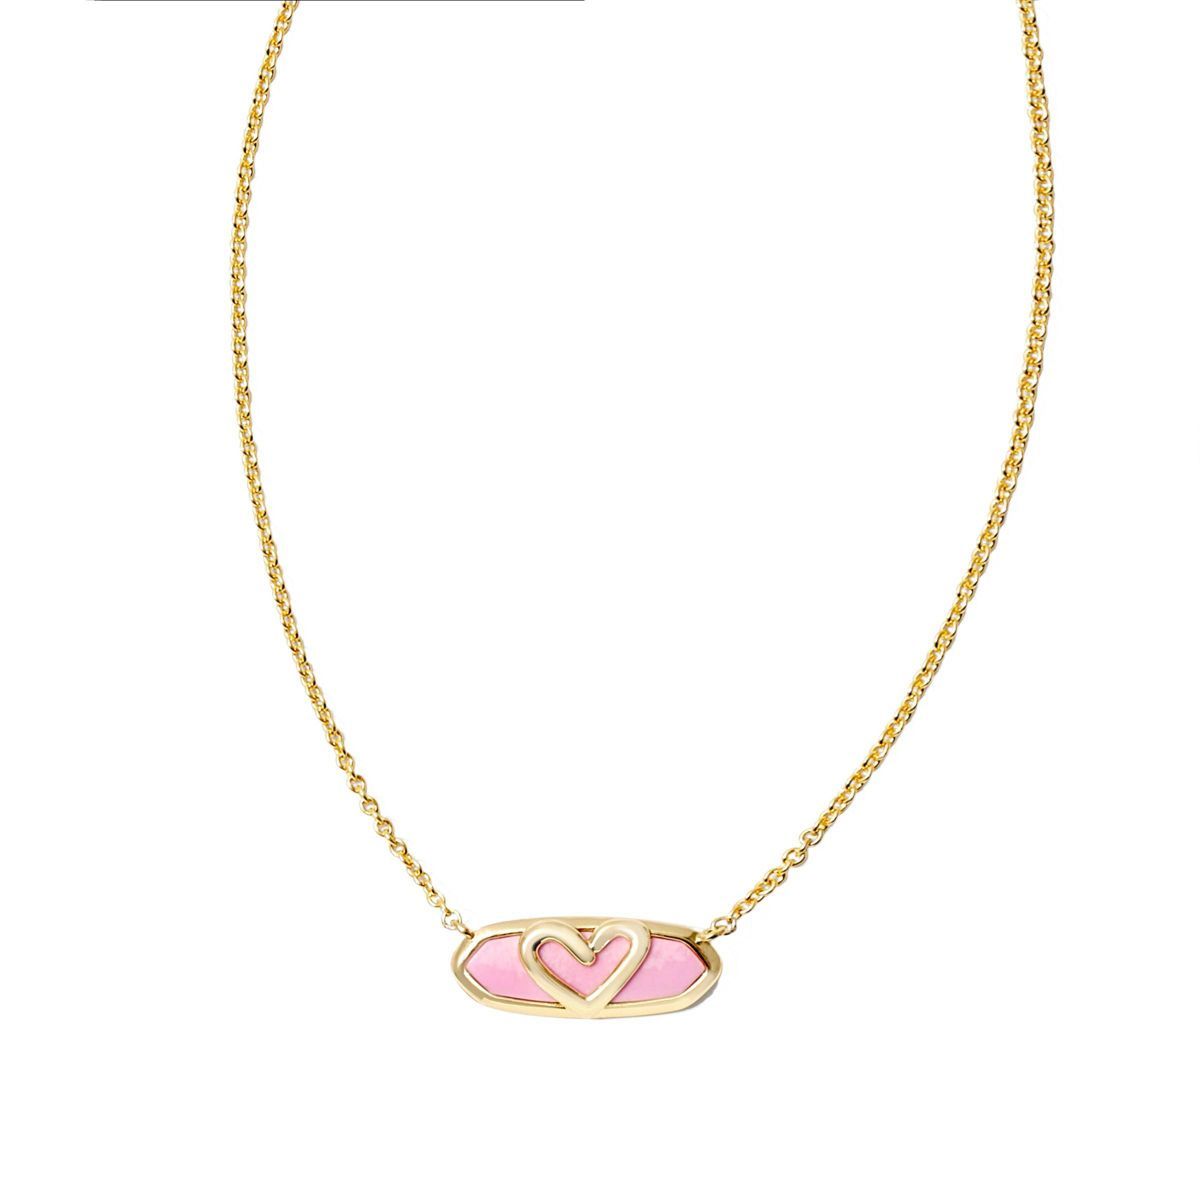 Kendra Scott Aria 14K Gold Over Brass Pendant Necklace | Target